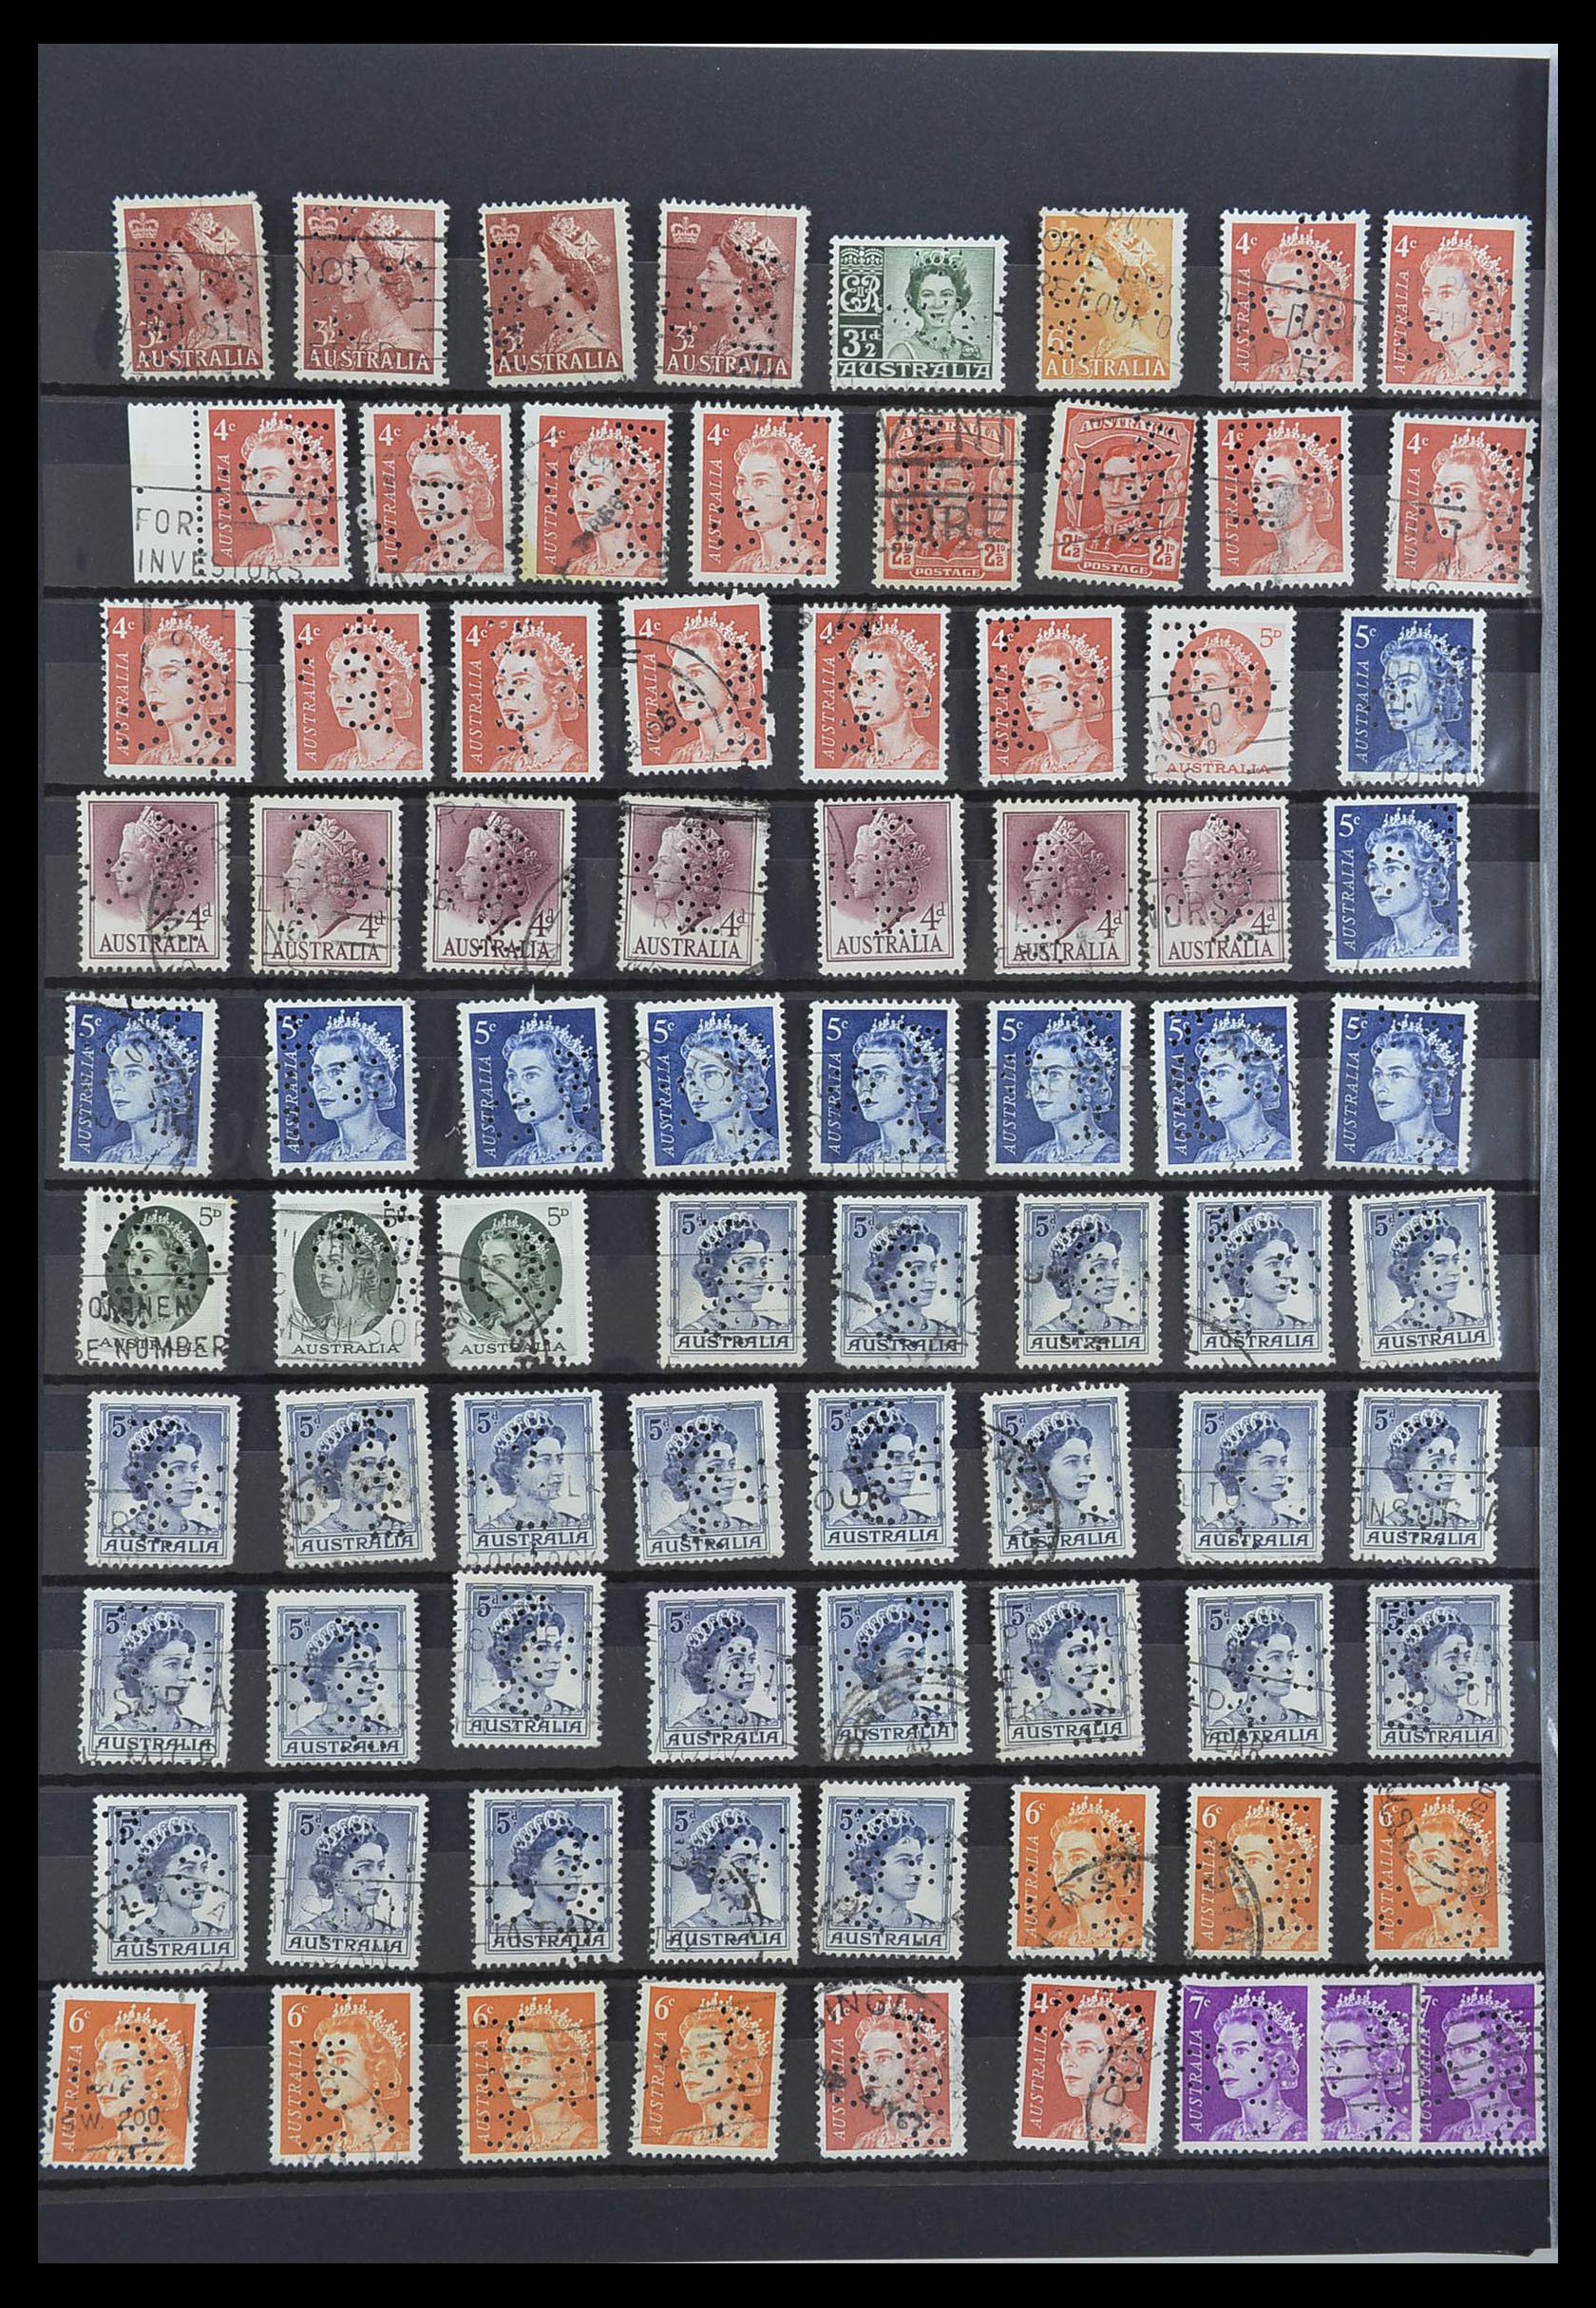 33510 012 - Stamp collection 33510 Australia perfins 1900-1970.